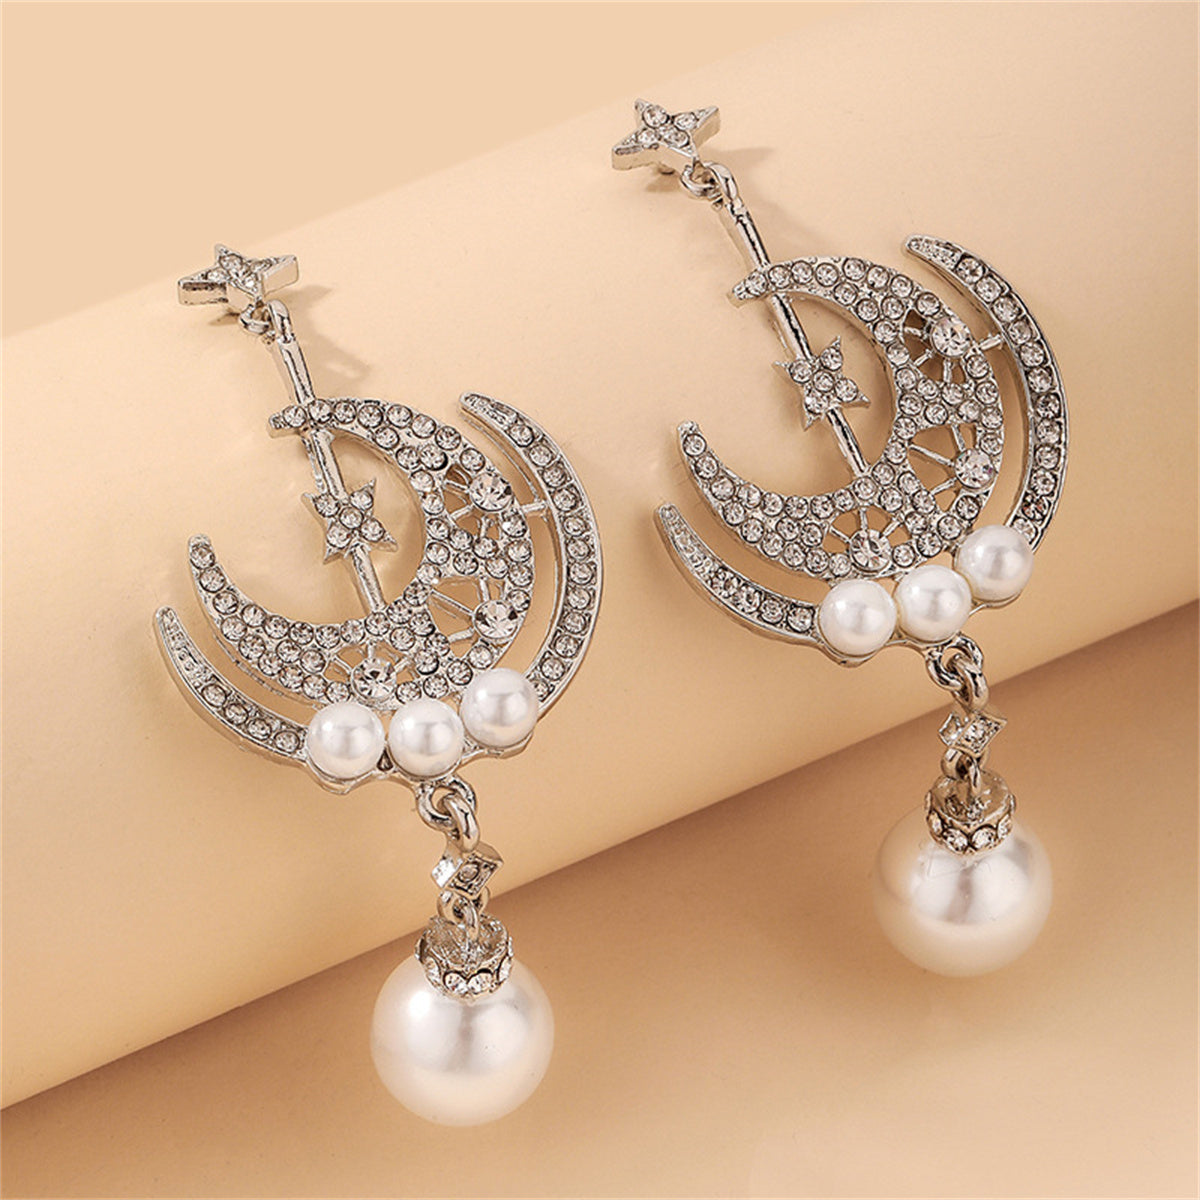 Cubic Zirconia & Pearl Silver-Plated Celestial Star Drop Earrings